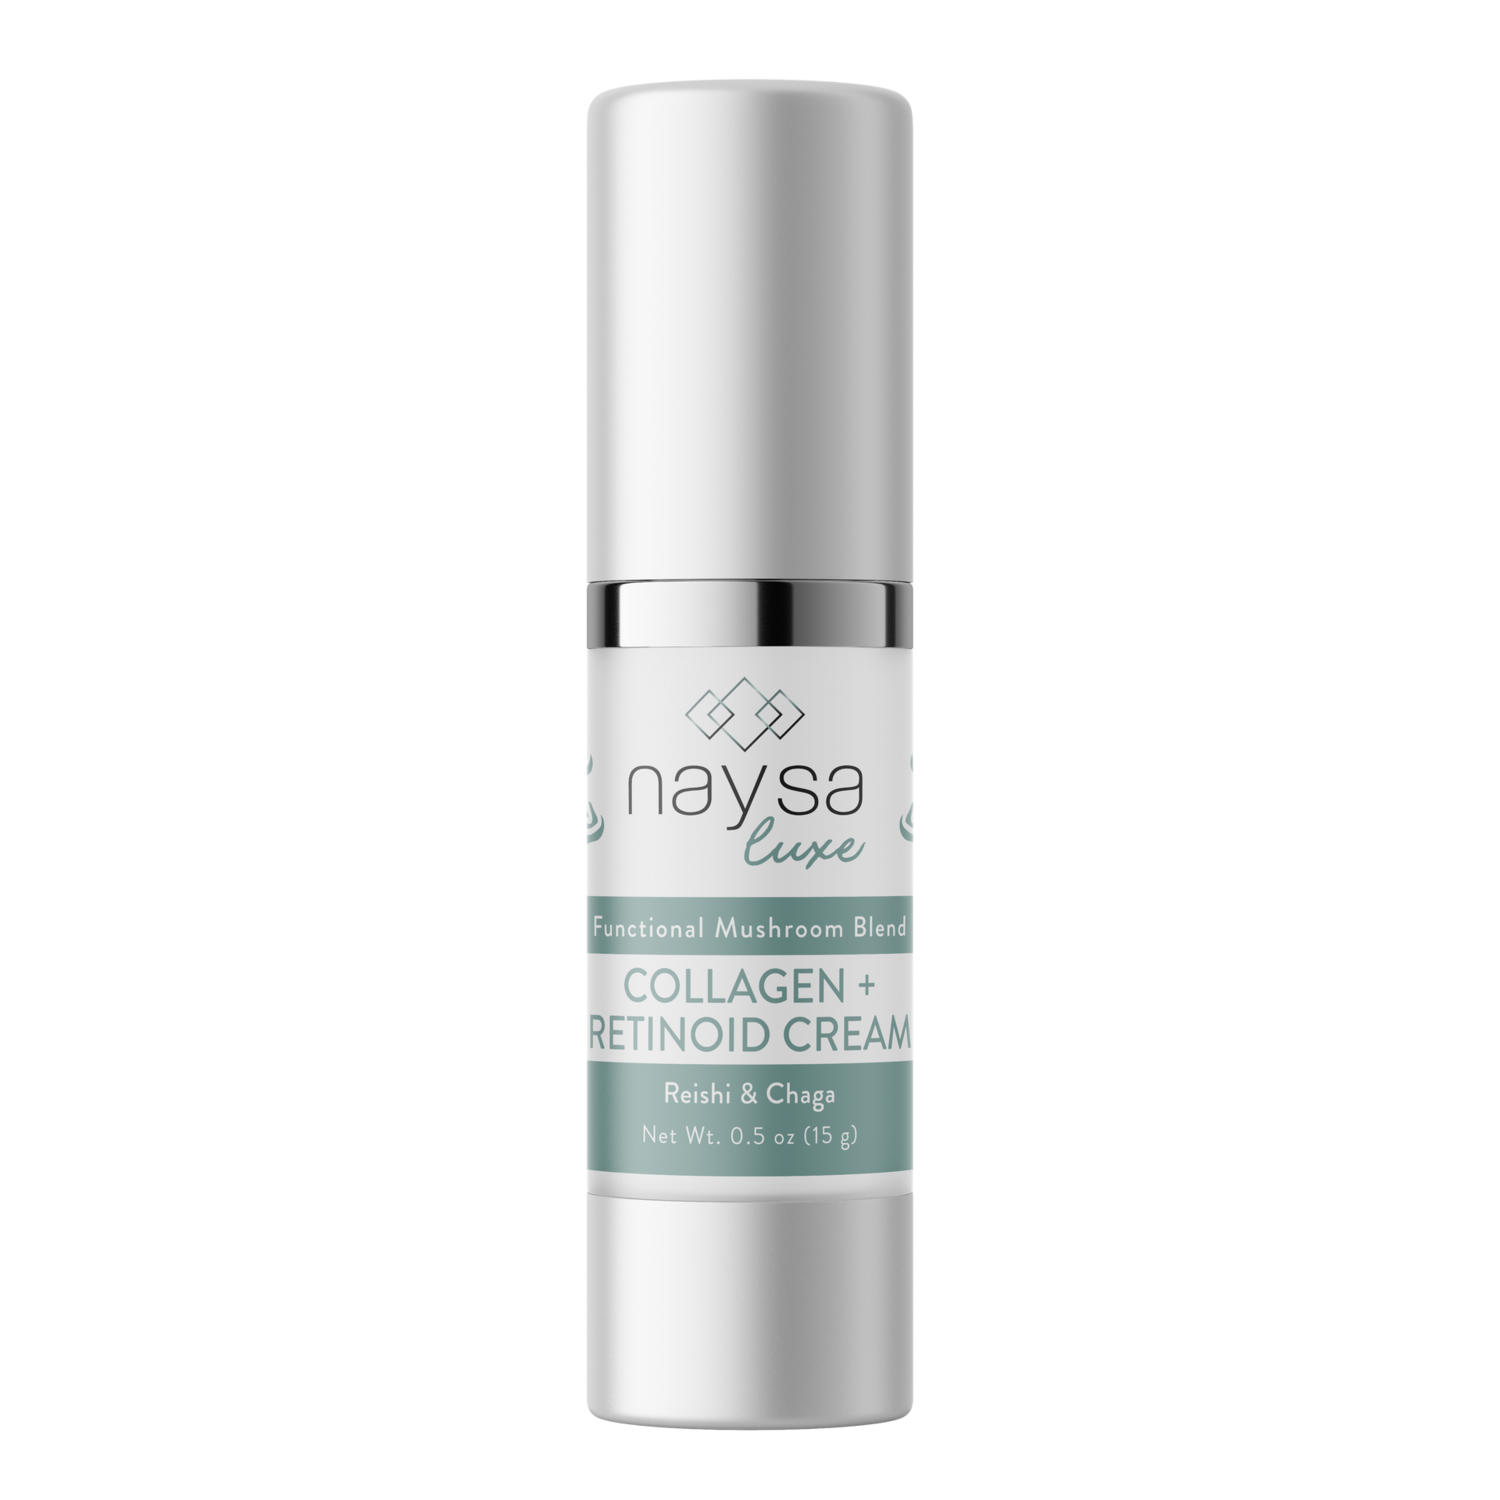 Naysa Collagen + Retinoid Cream with Mushroom